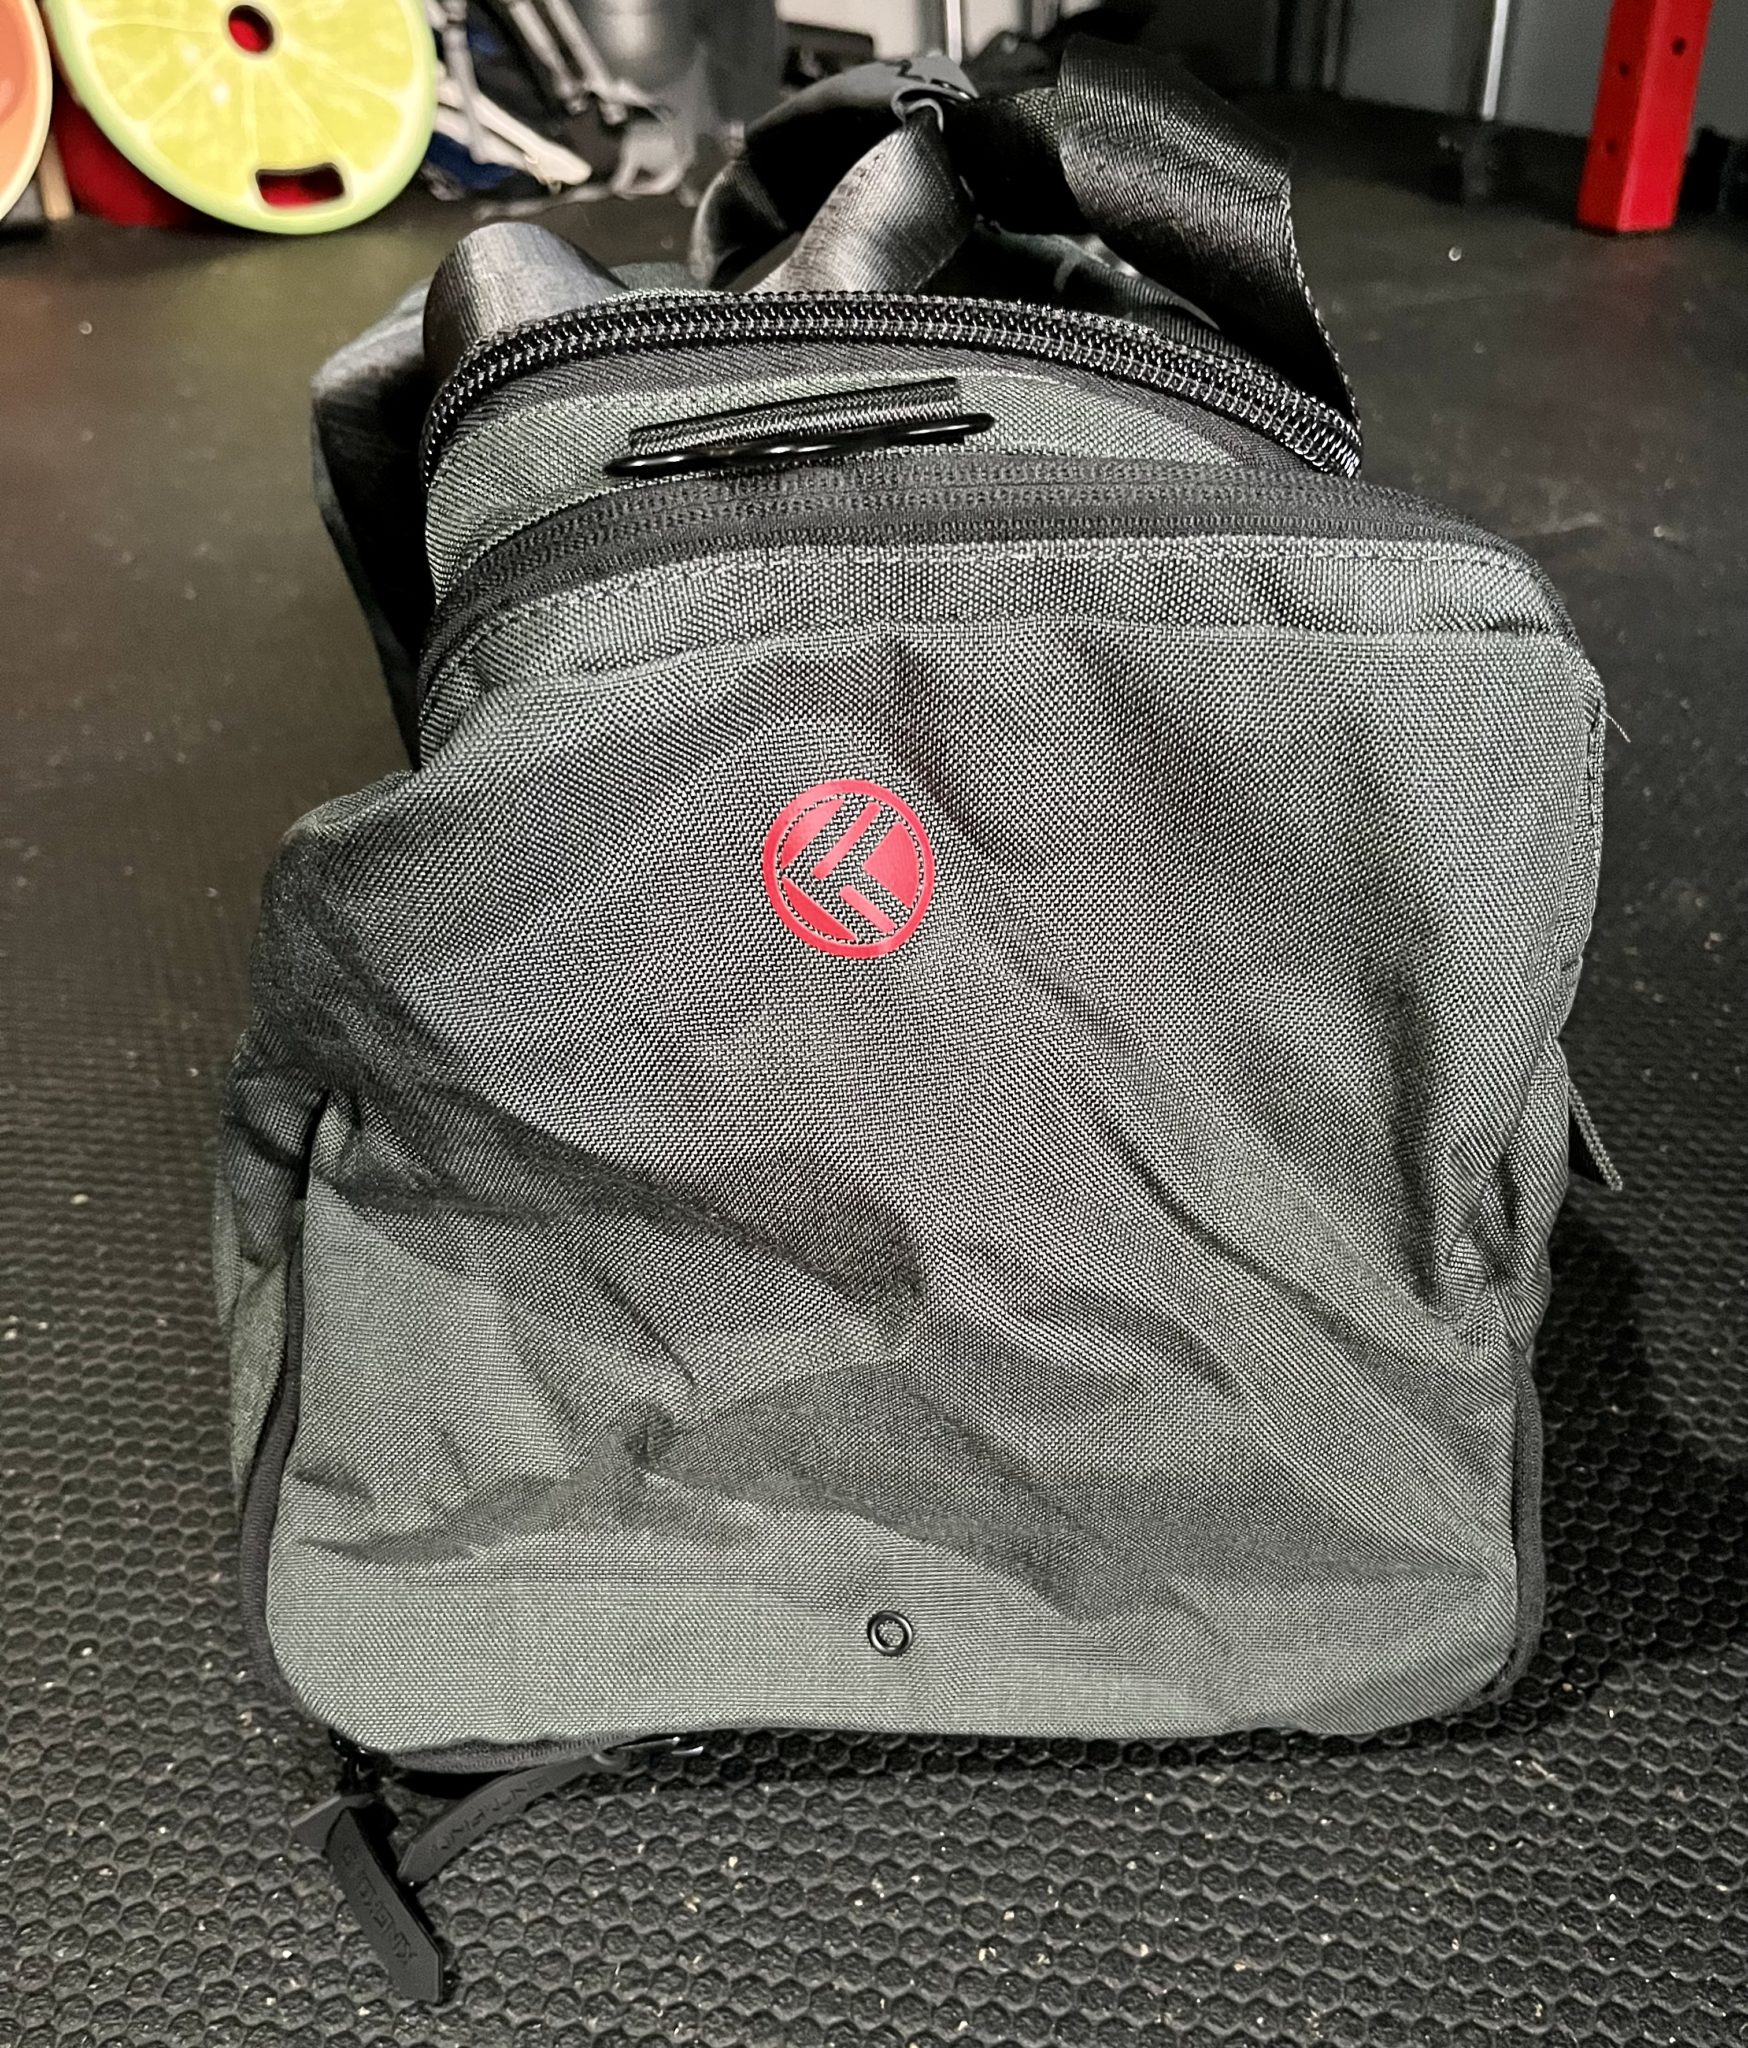 King Kong Duffle Bag Review - Plus33 JNR Gym Duffel Bag